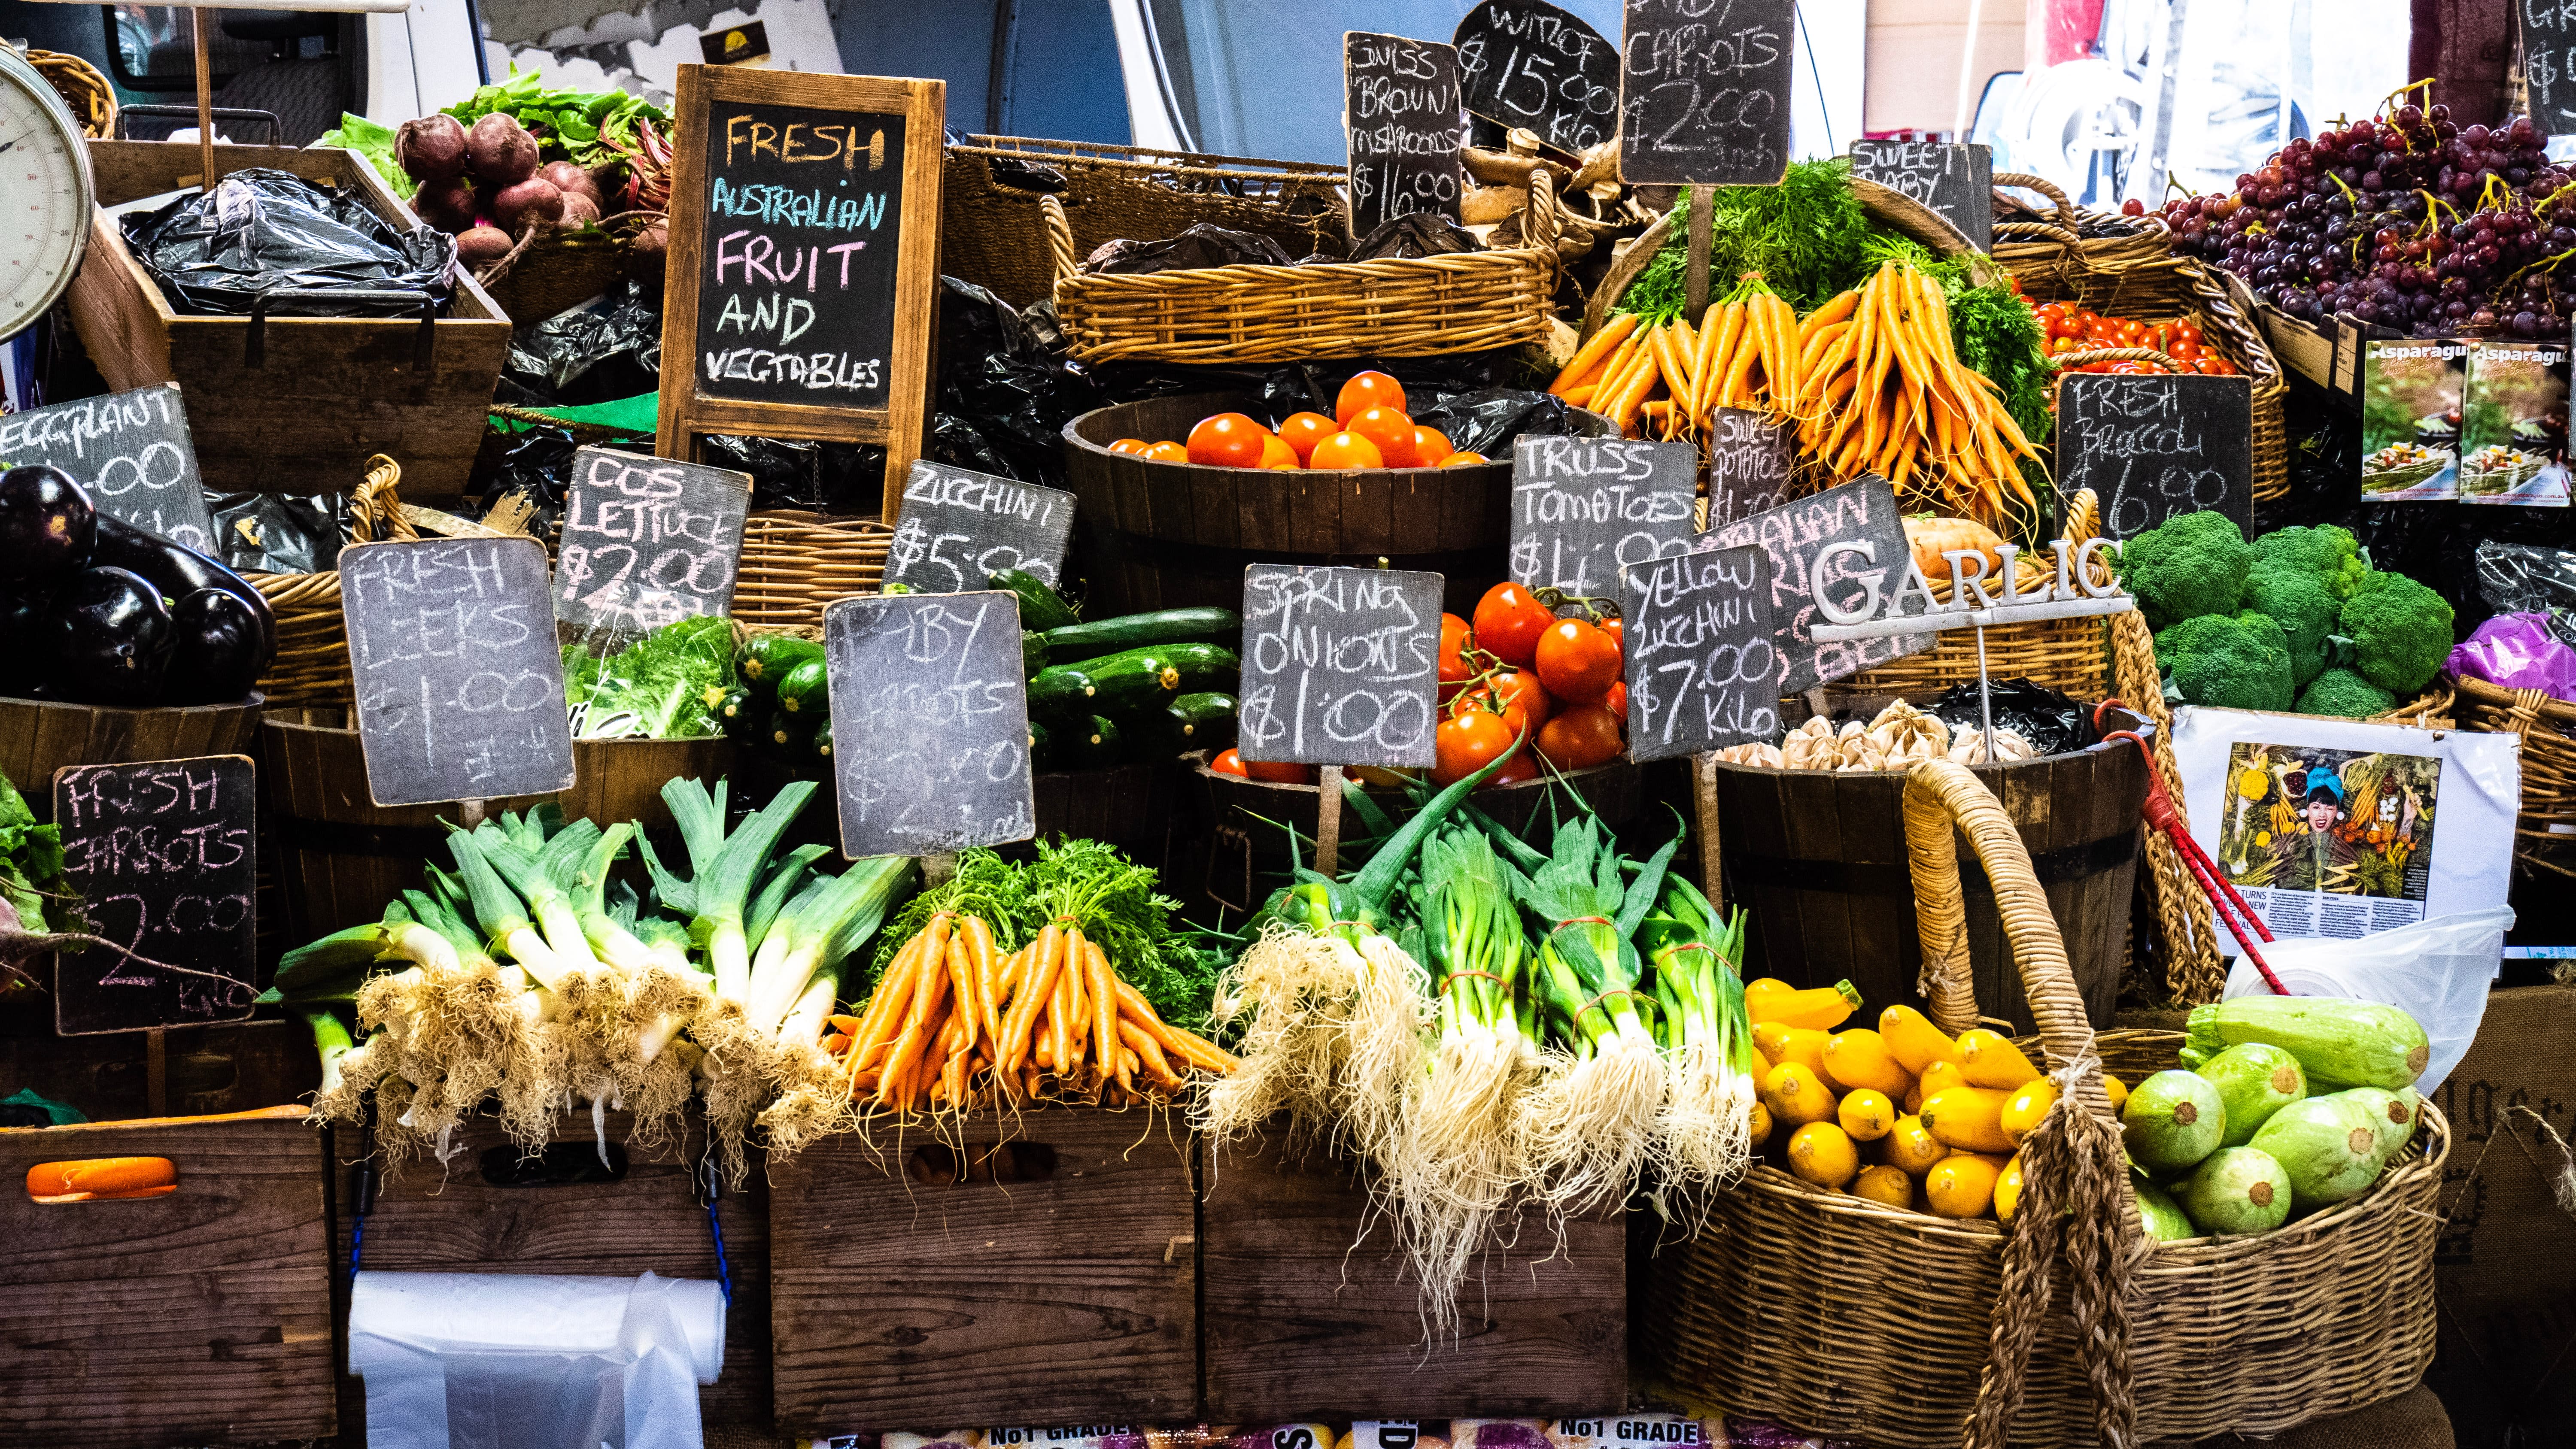 Explore NYC's Best Farmers Markets, NYC Greenmarkets